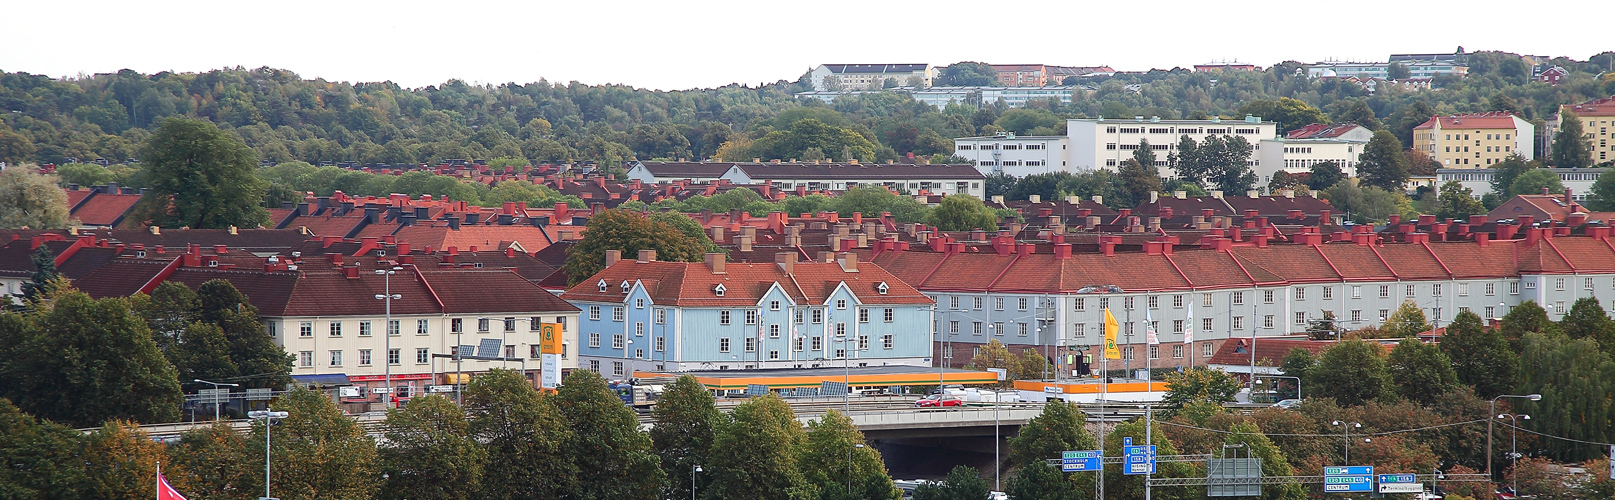 Göteborg-004